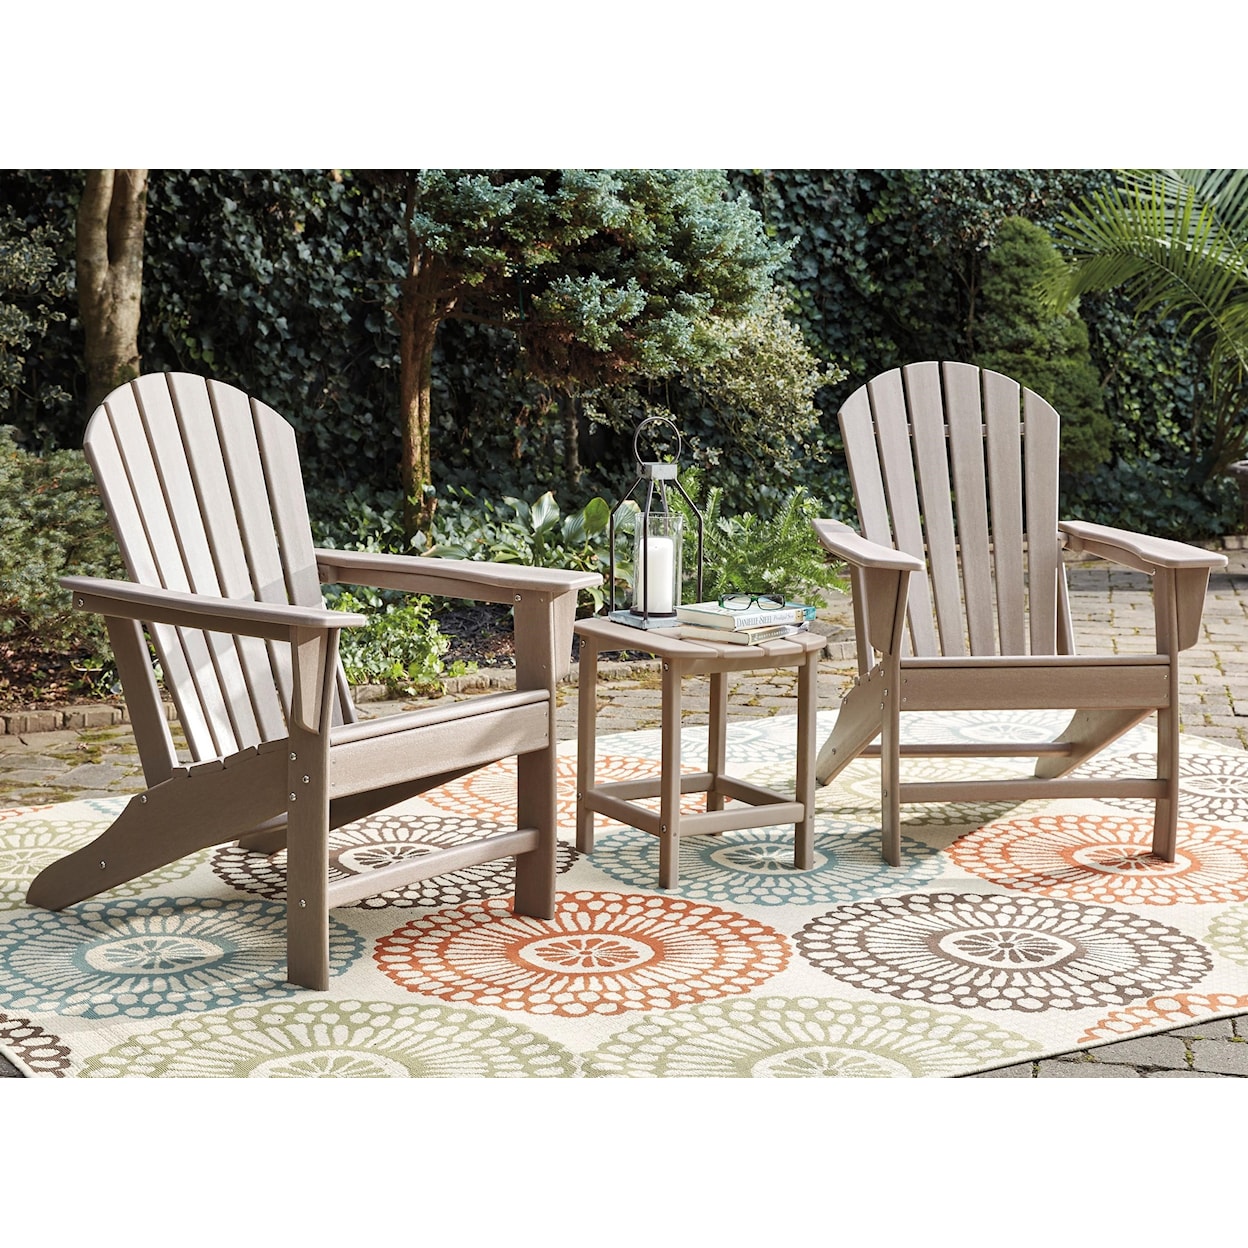 Ashley Furniture Signature Design Sundown Treasure 2 Adirondack Chairs and End Table Set